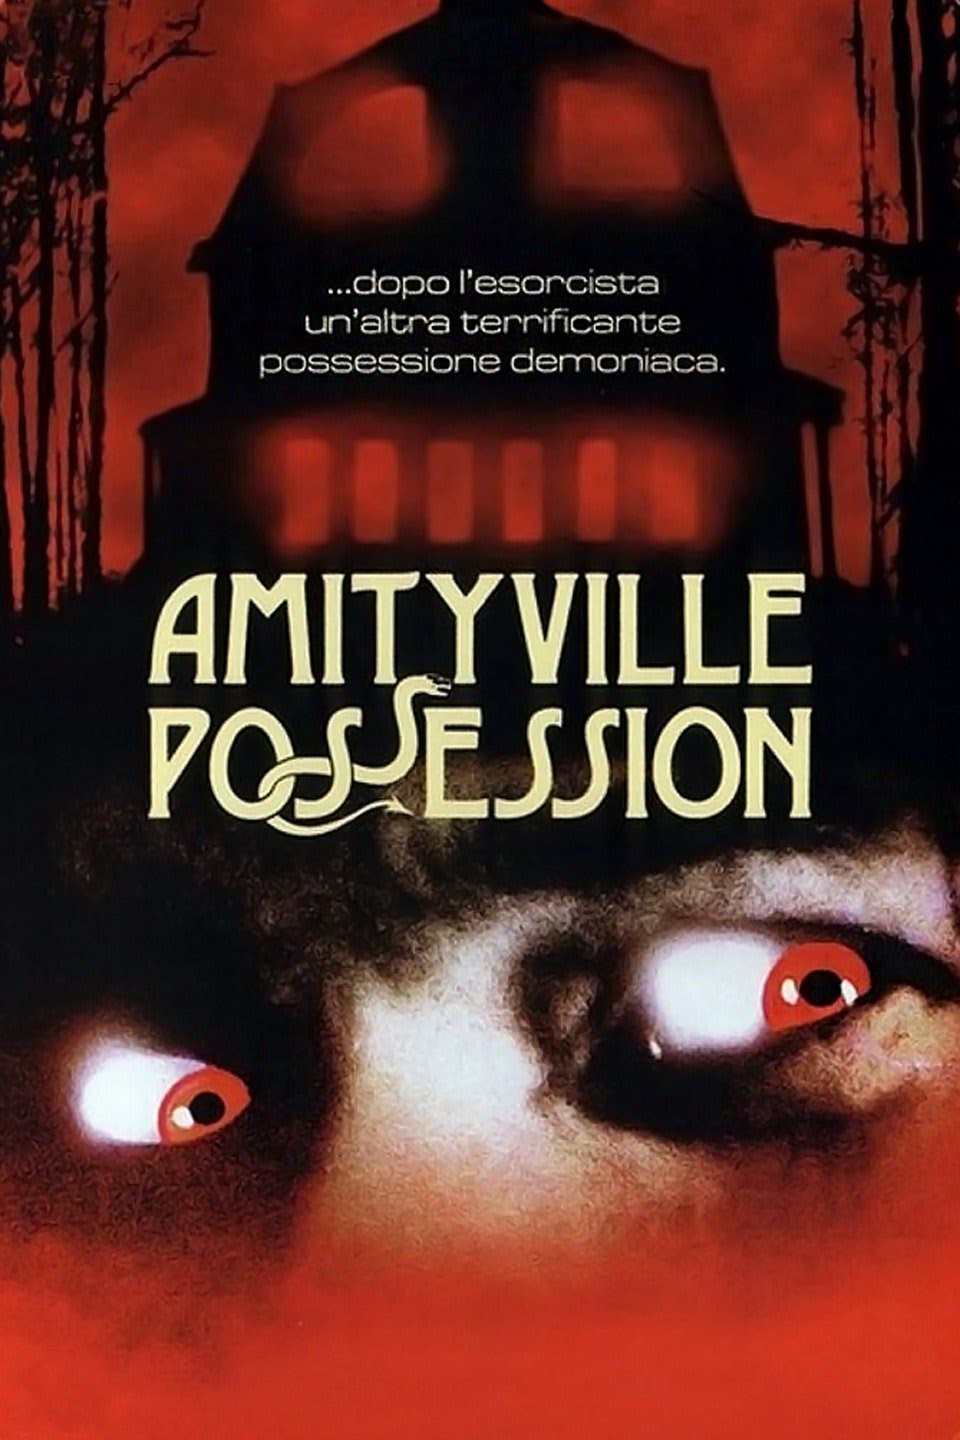 Amityville possession [HD] (1982)